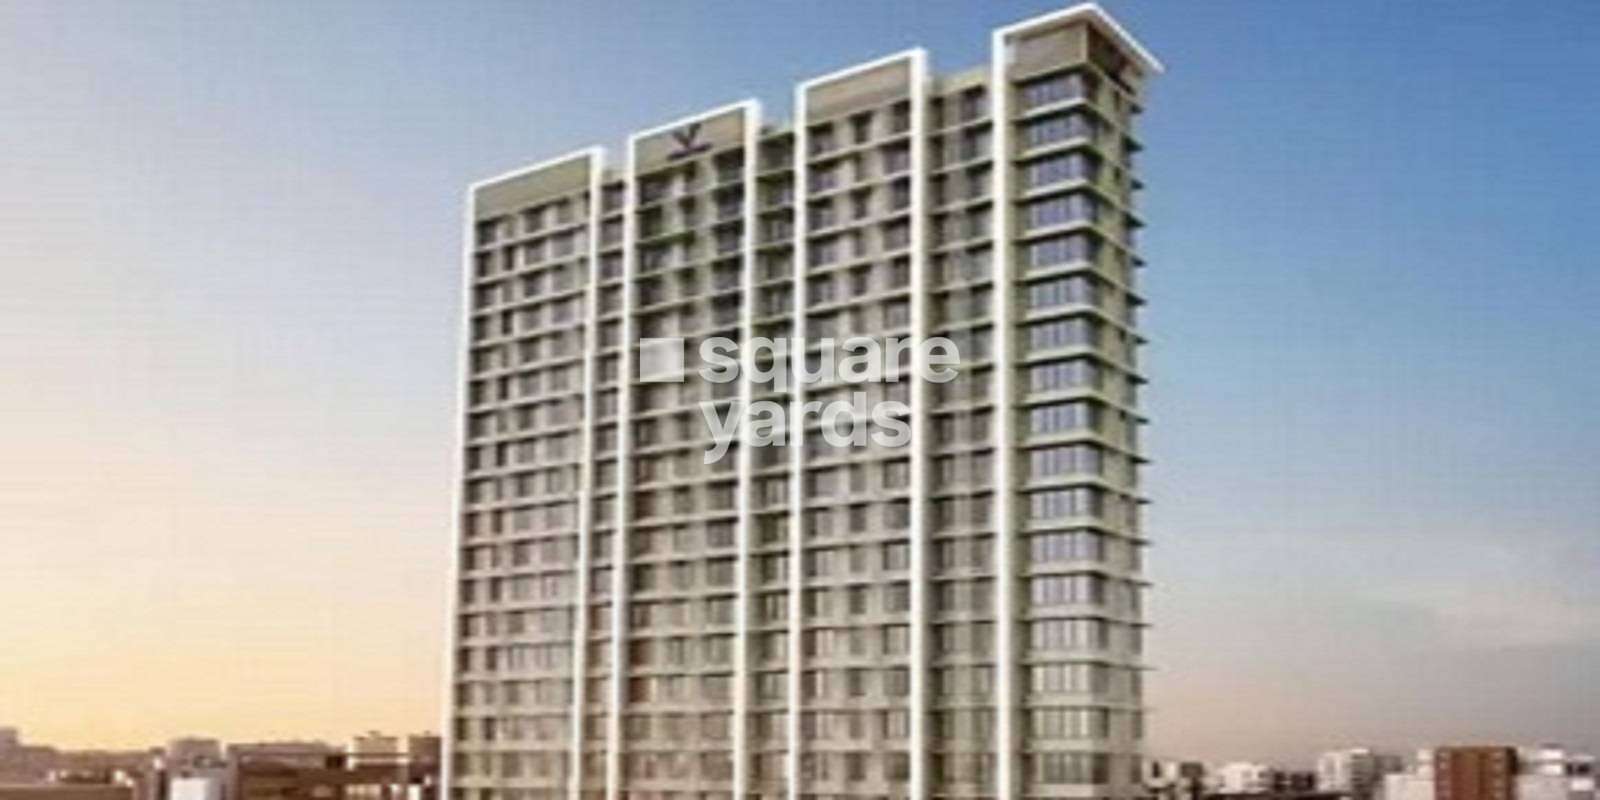 Sangeeta Apartment Malad Cover Image